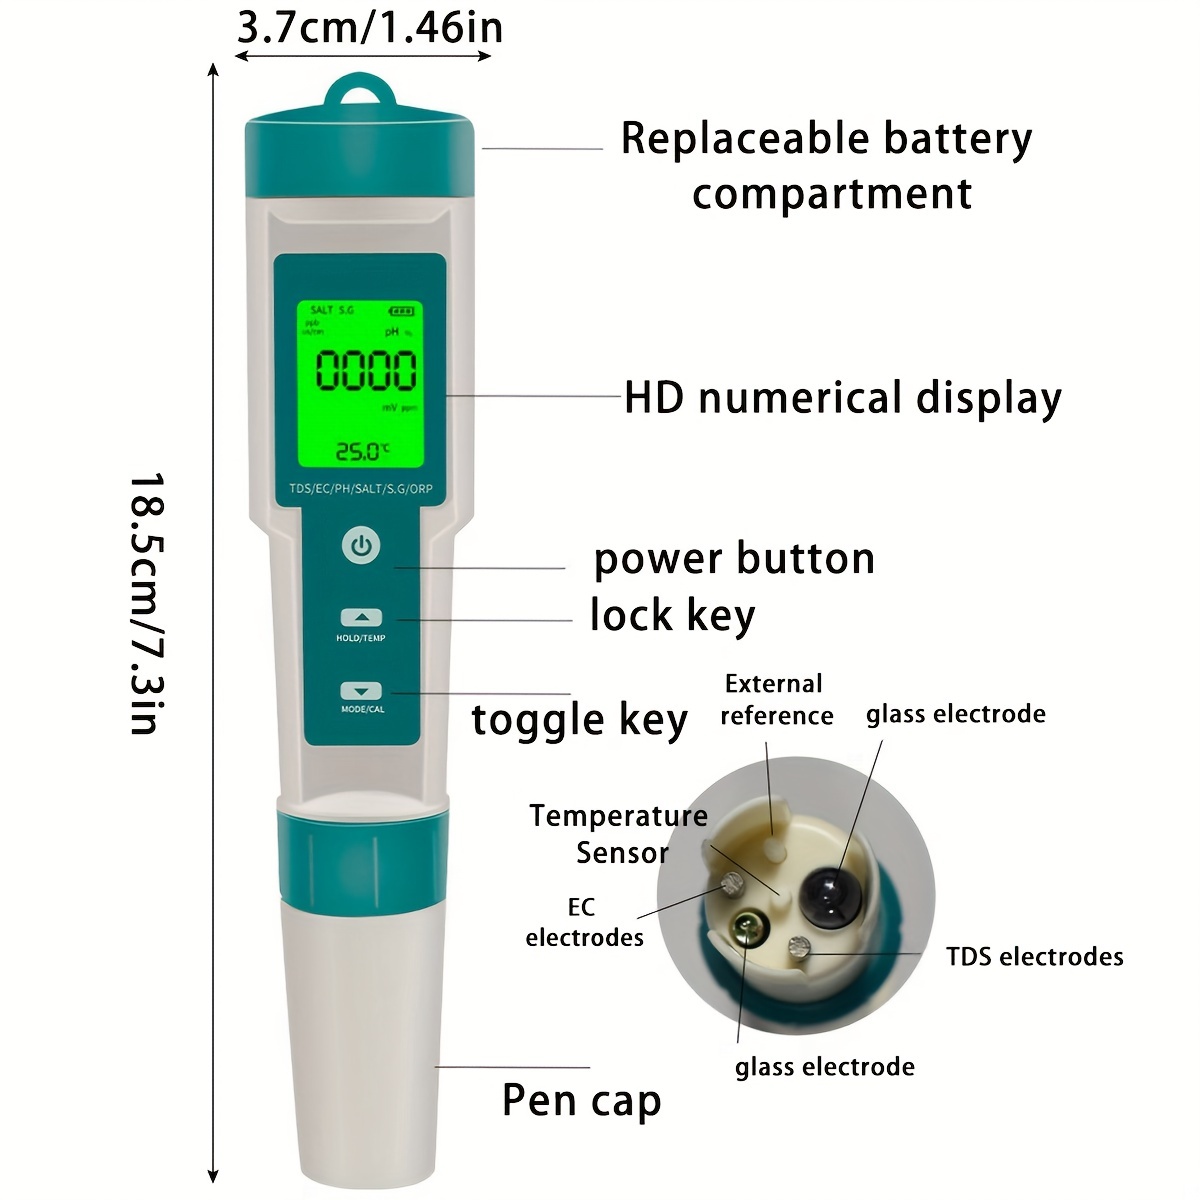 PH Meter 0.01 PH High Precision Water Quality Tester Portable PH